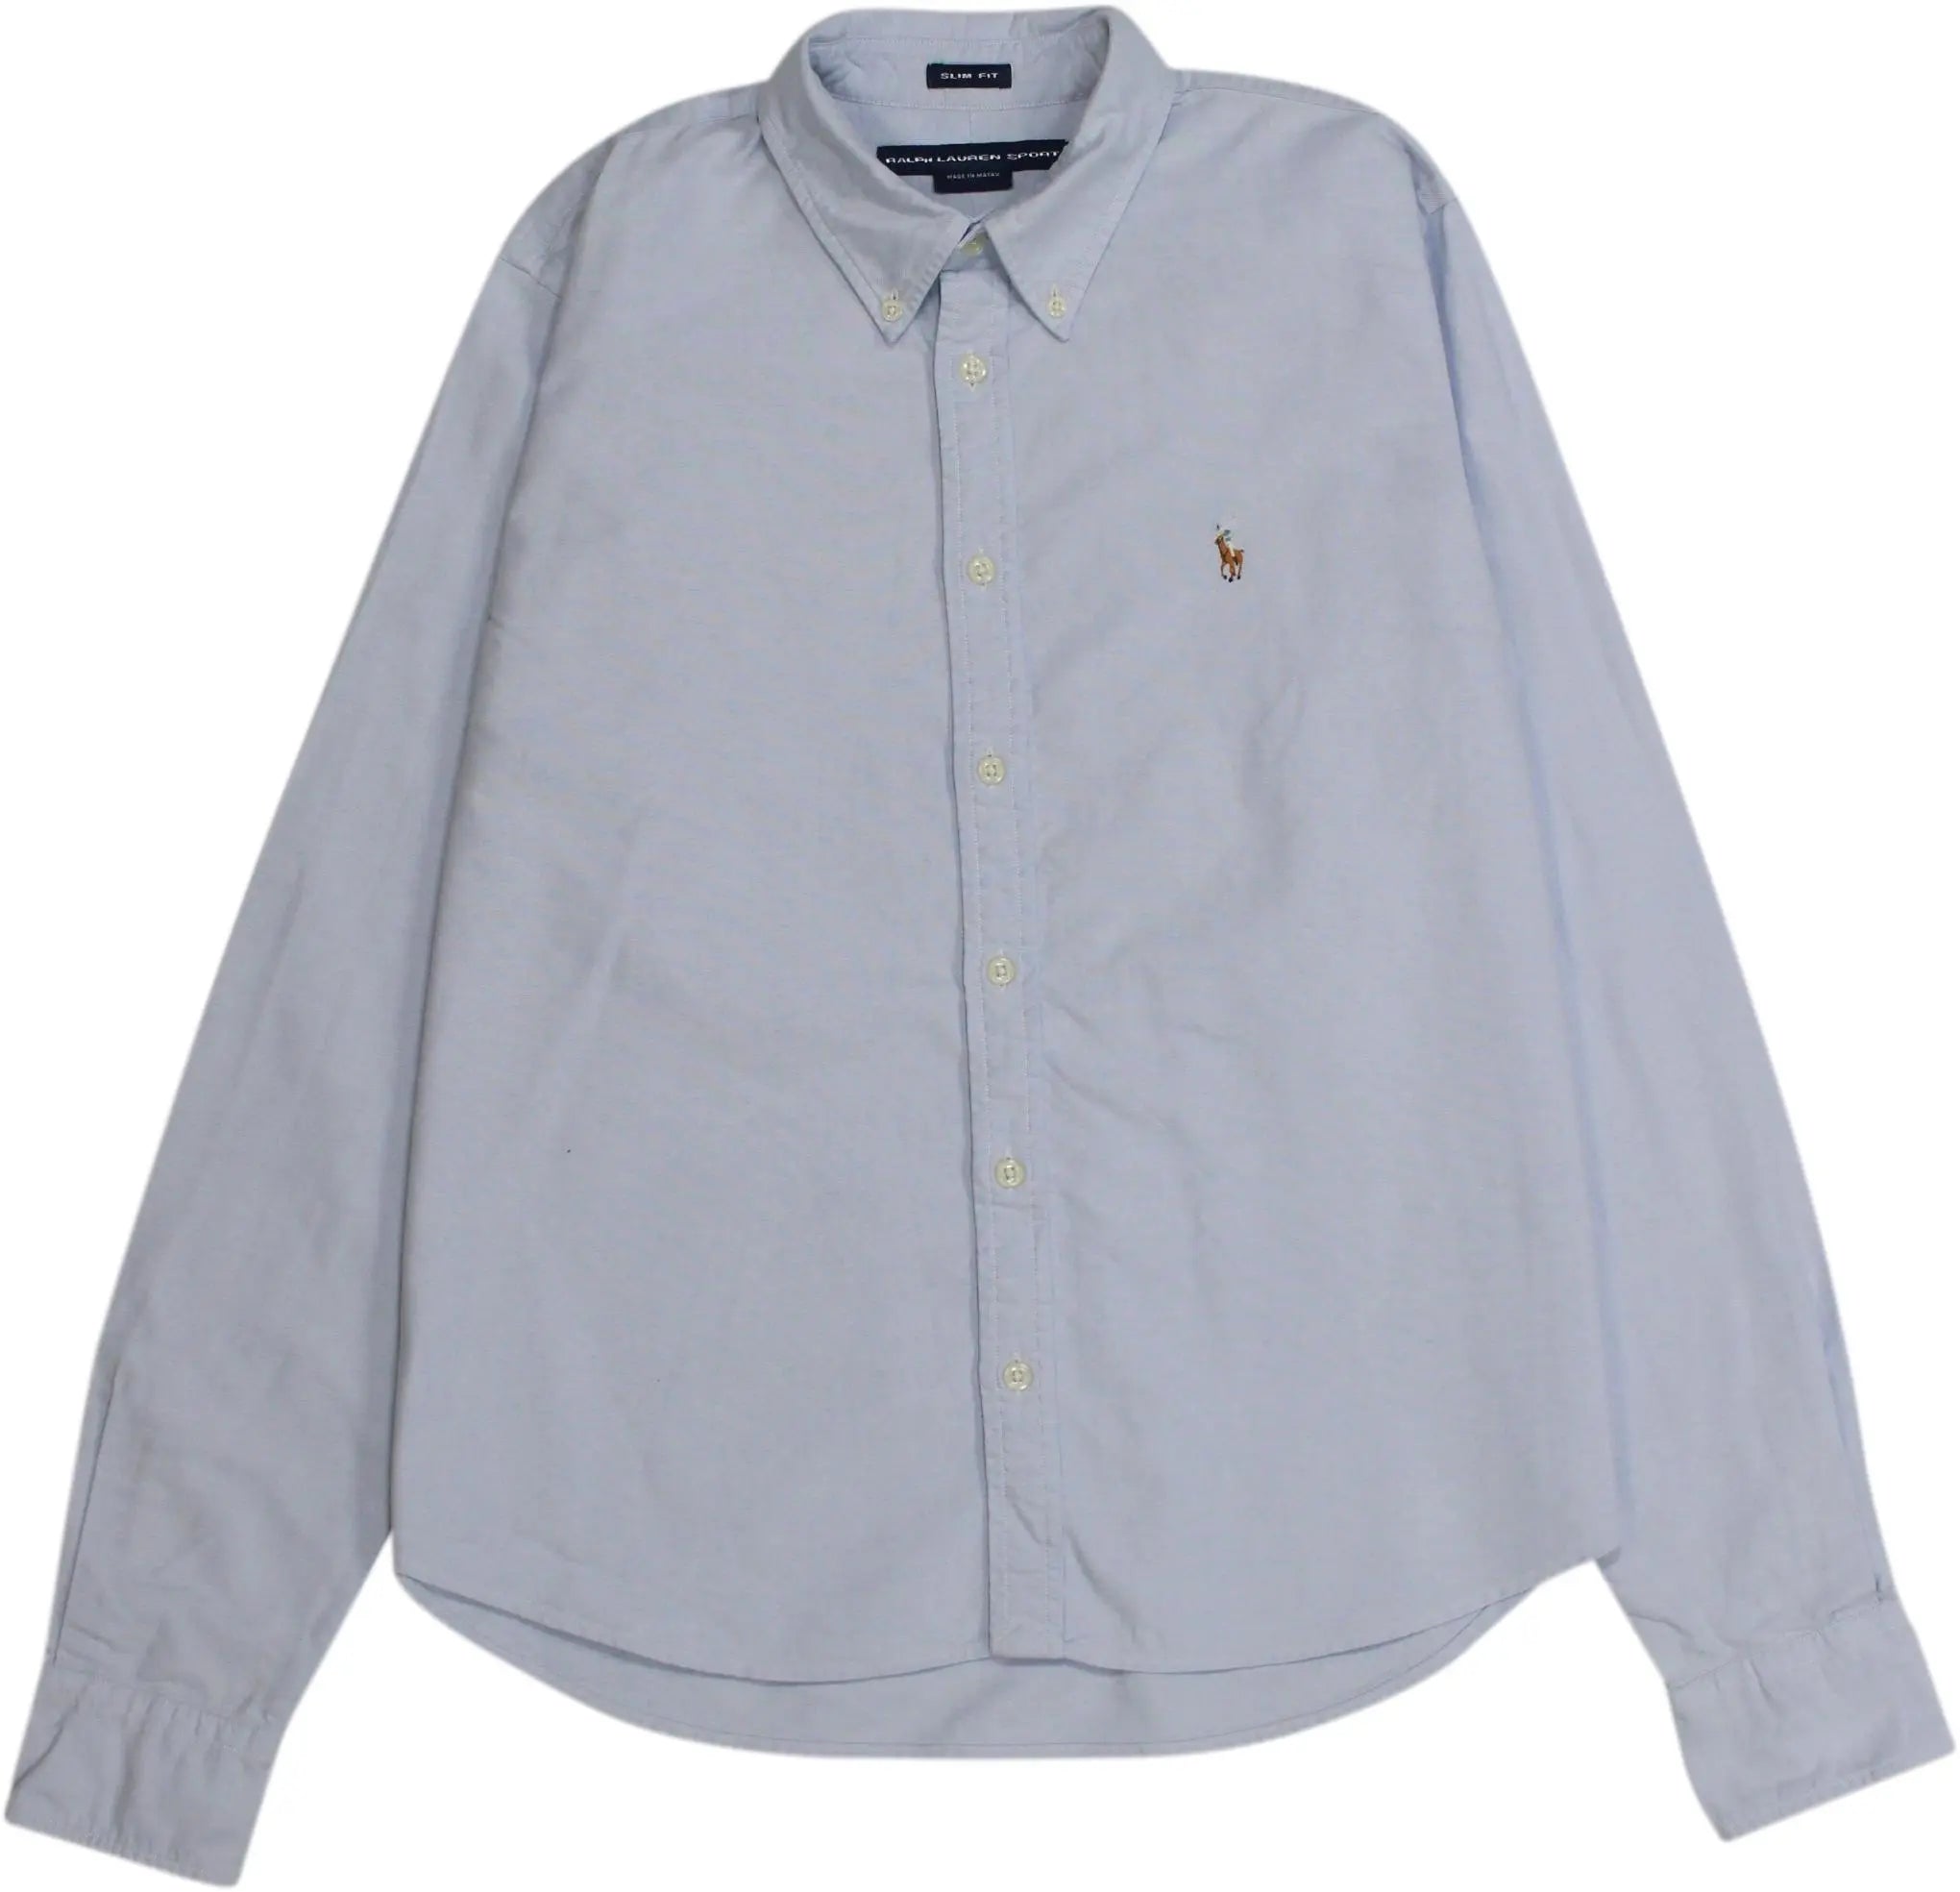 Ralph Lauren - Blue Ralph Lauren Shirt- ThriftTale.com - Vintage and second handclothing